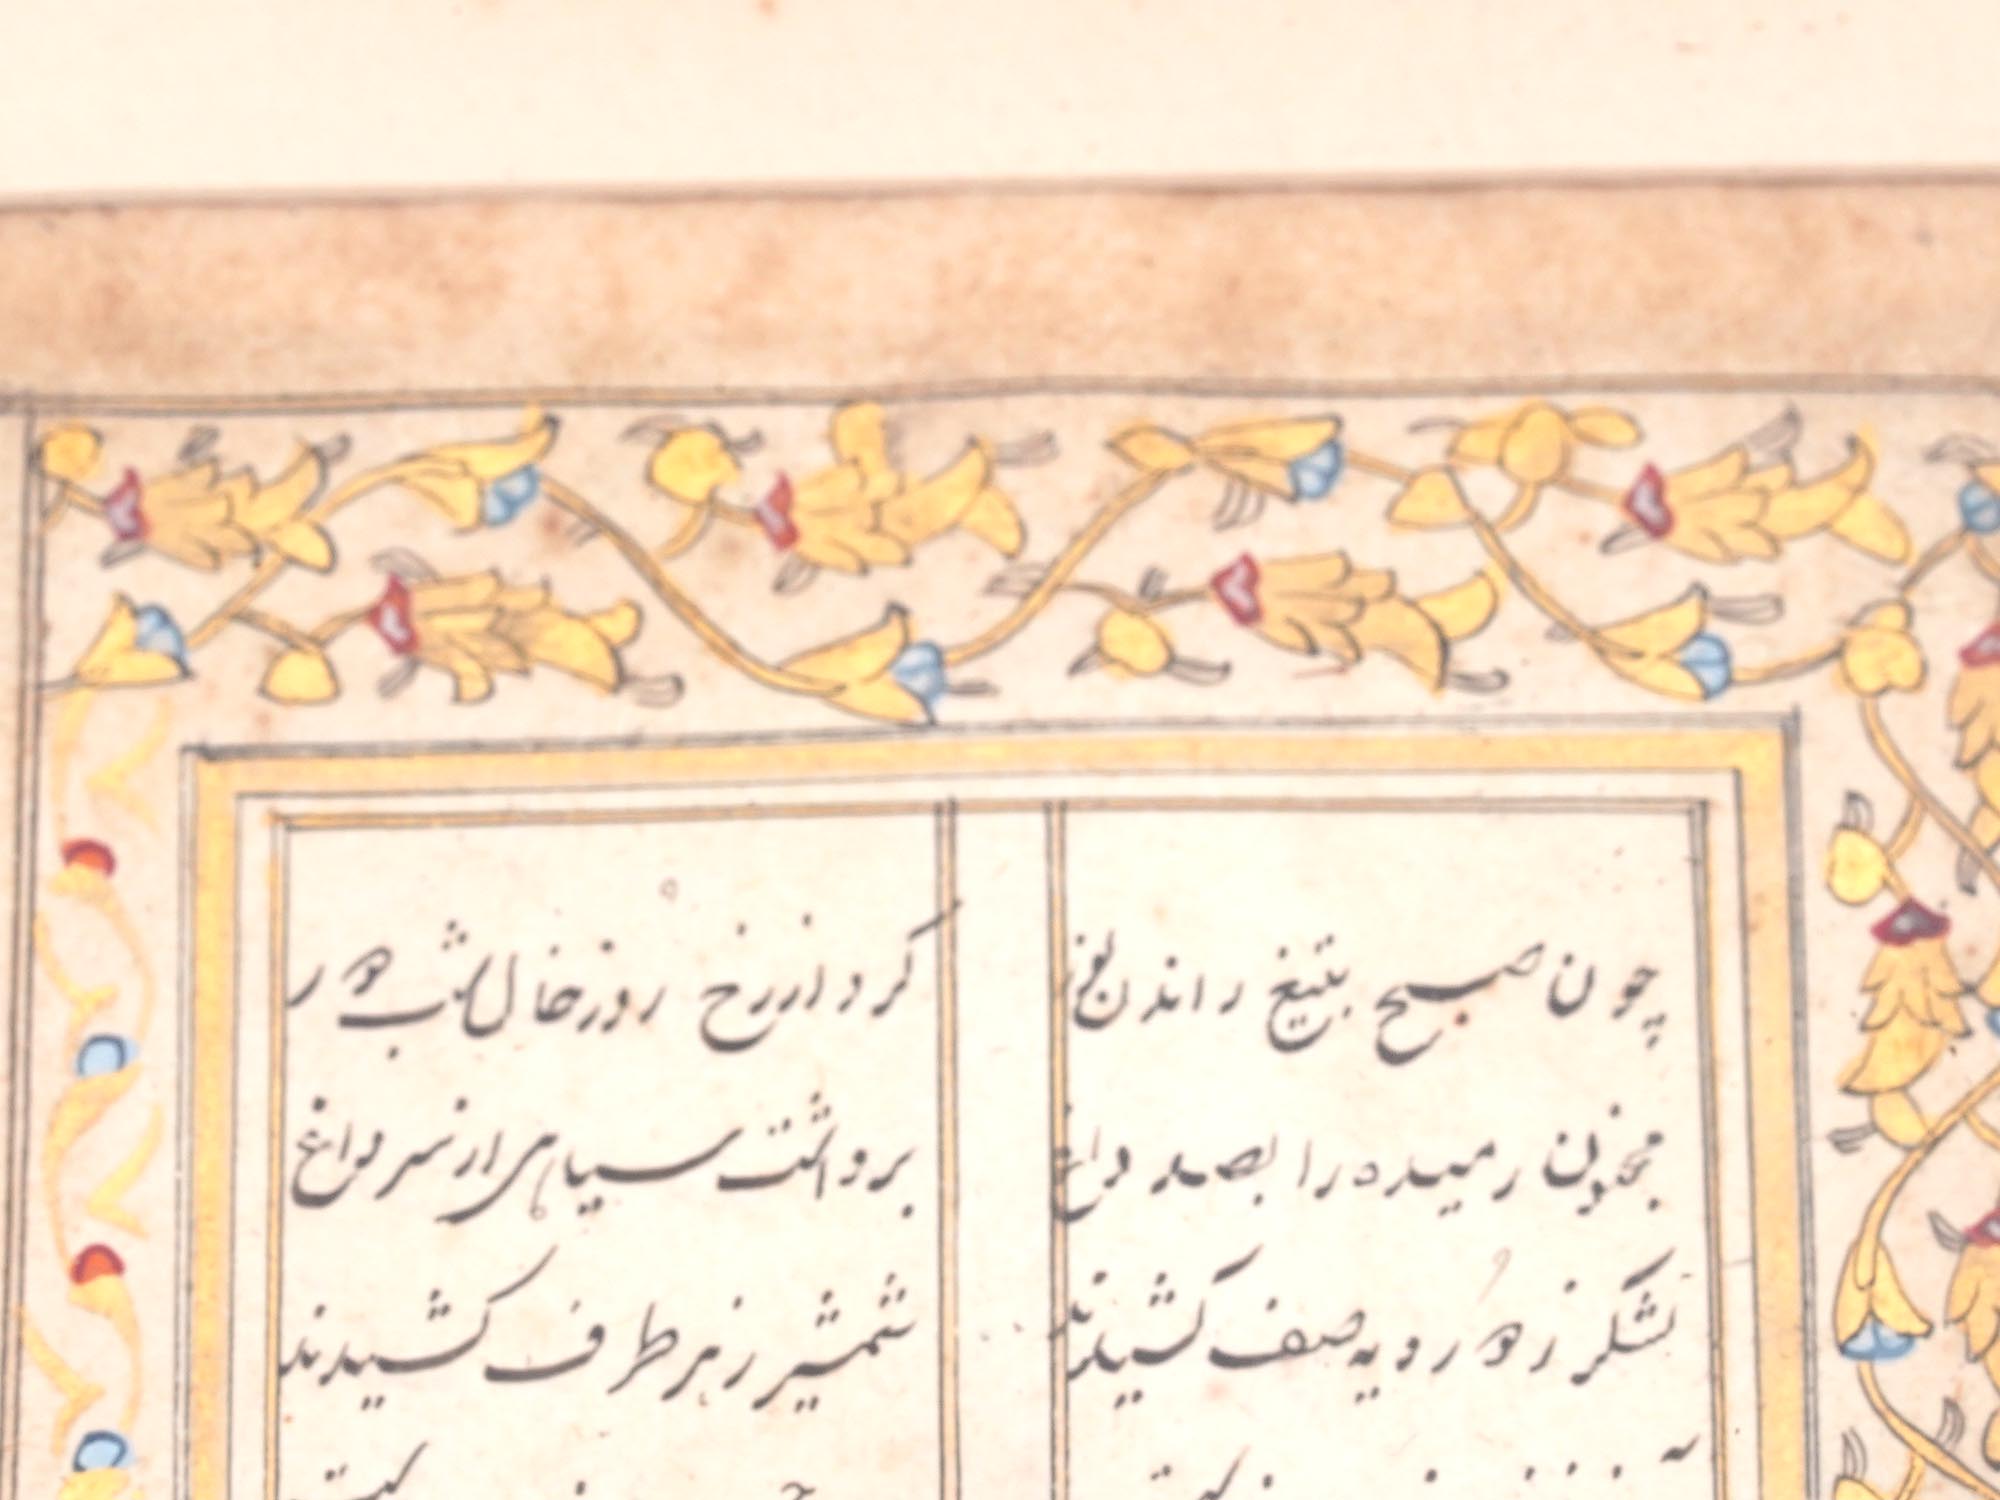 17TH CENTURY PERSIAN ISLAMIC CALLIGRAPHY MANUSCRIPT PIC-3